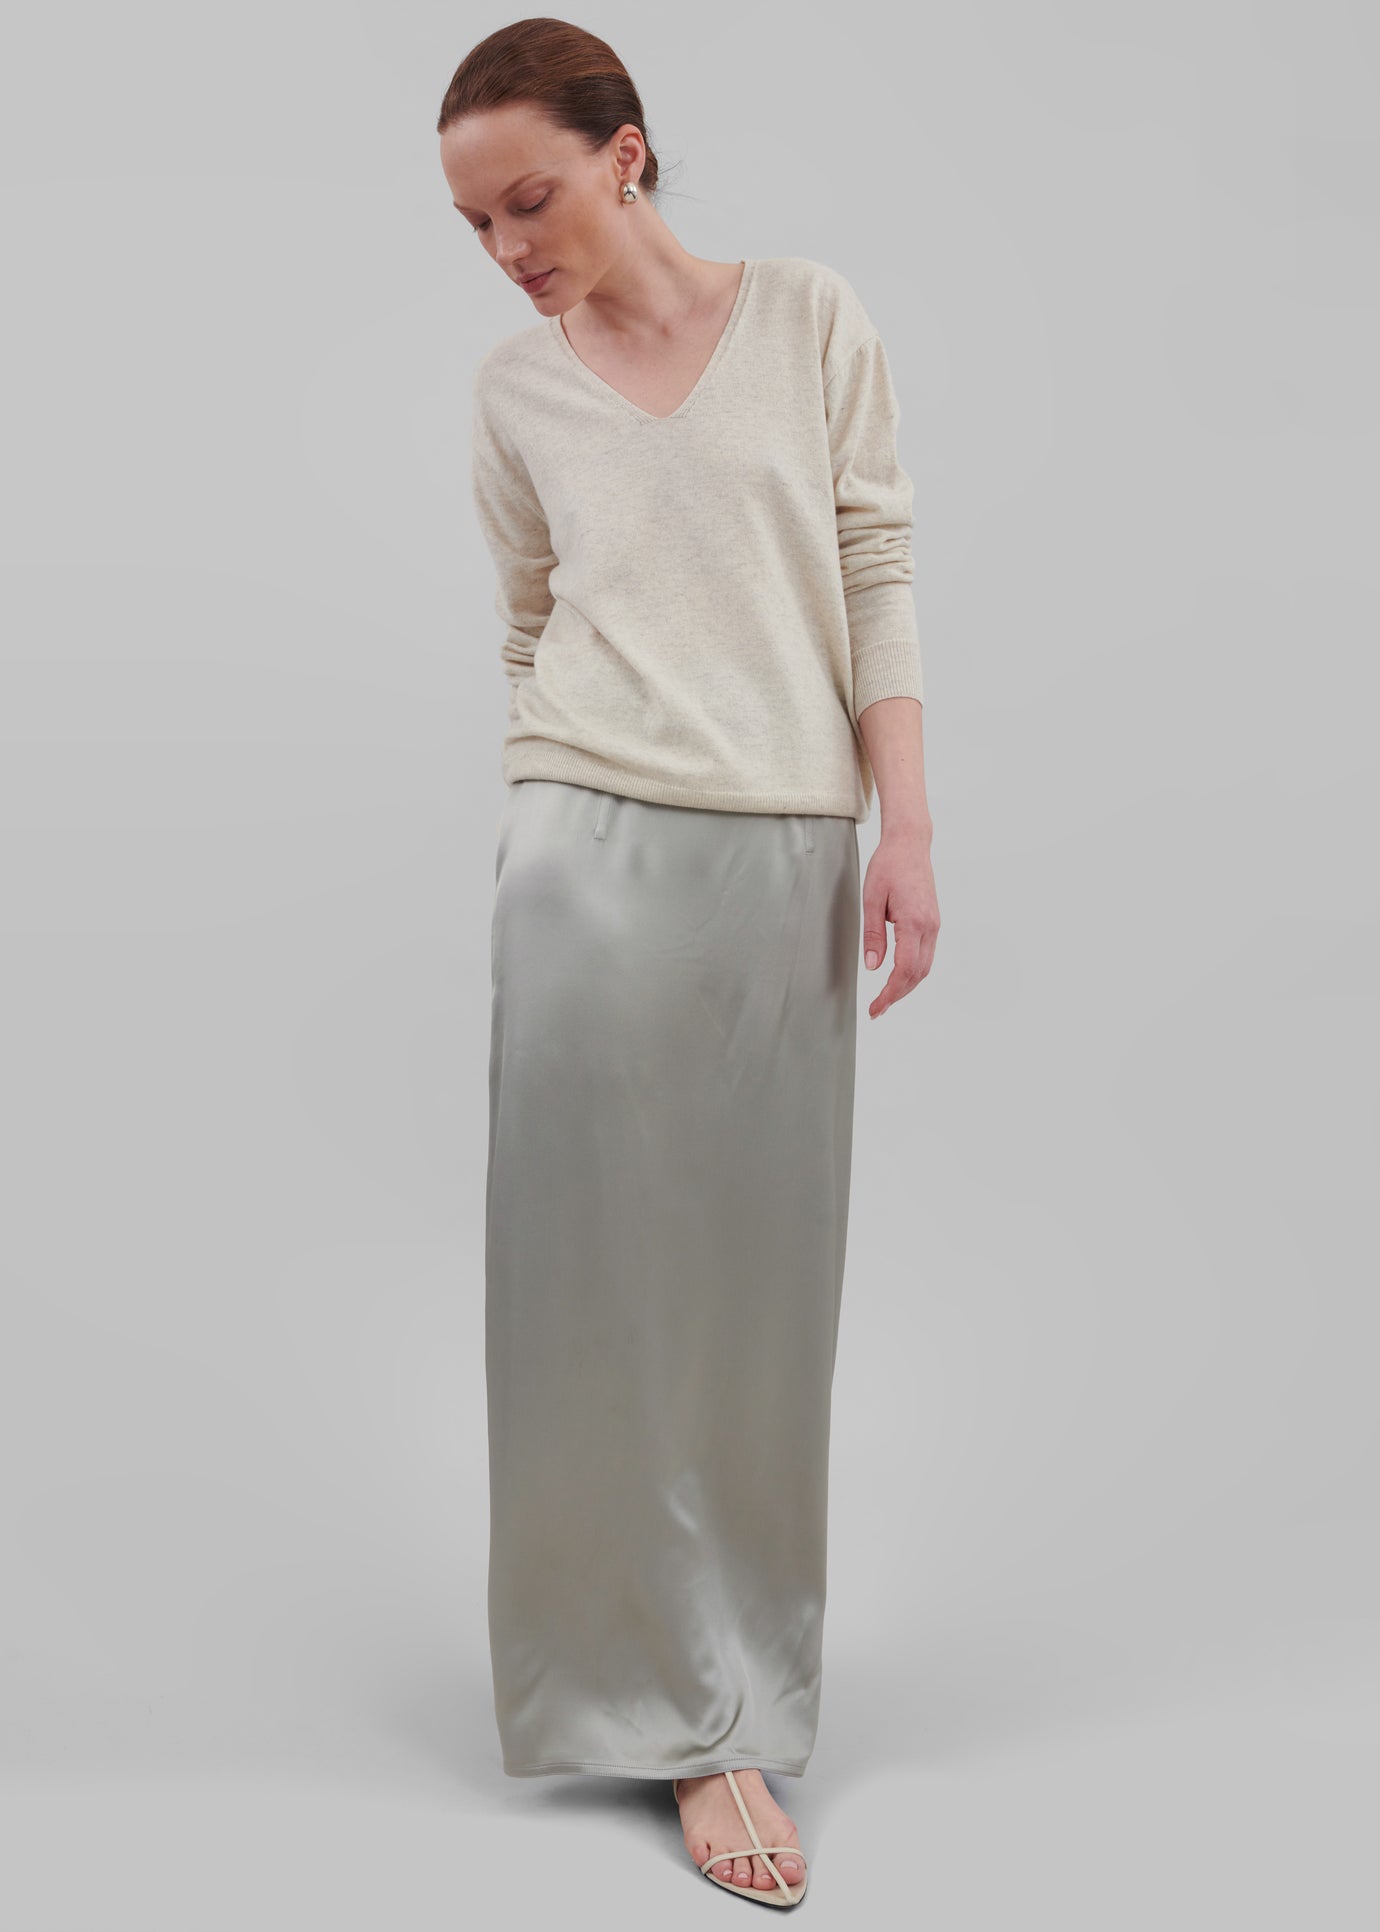 Bevza Ankle Length Skirt - Steel Grey